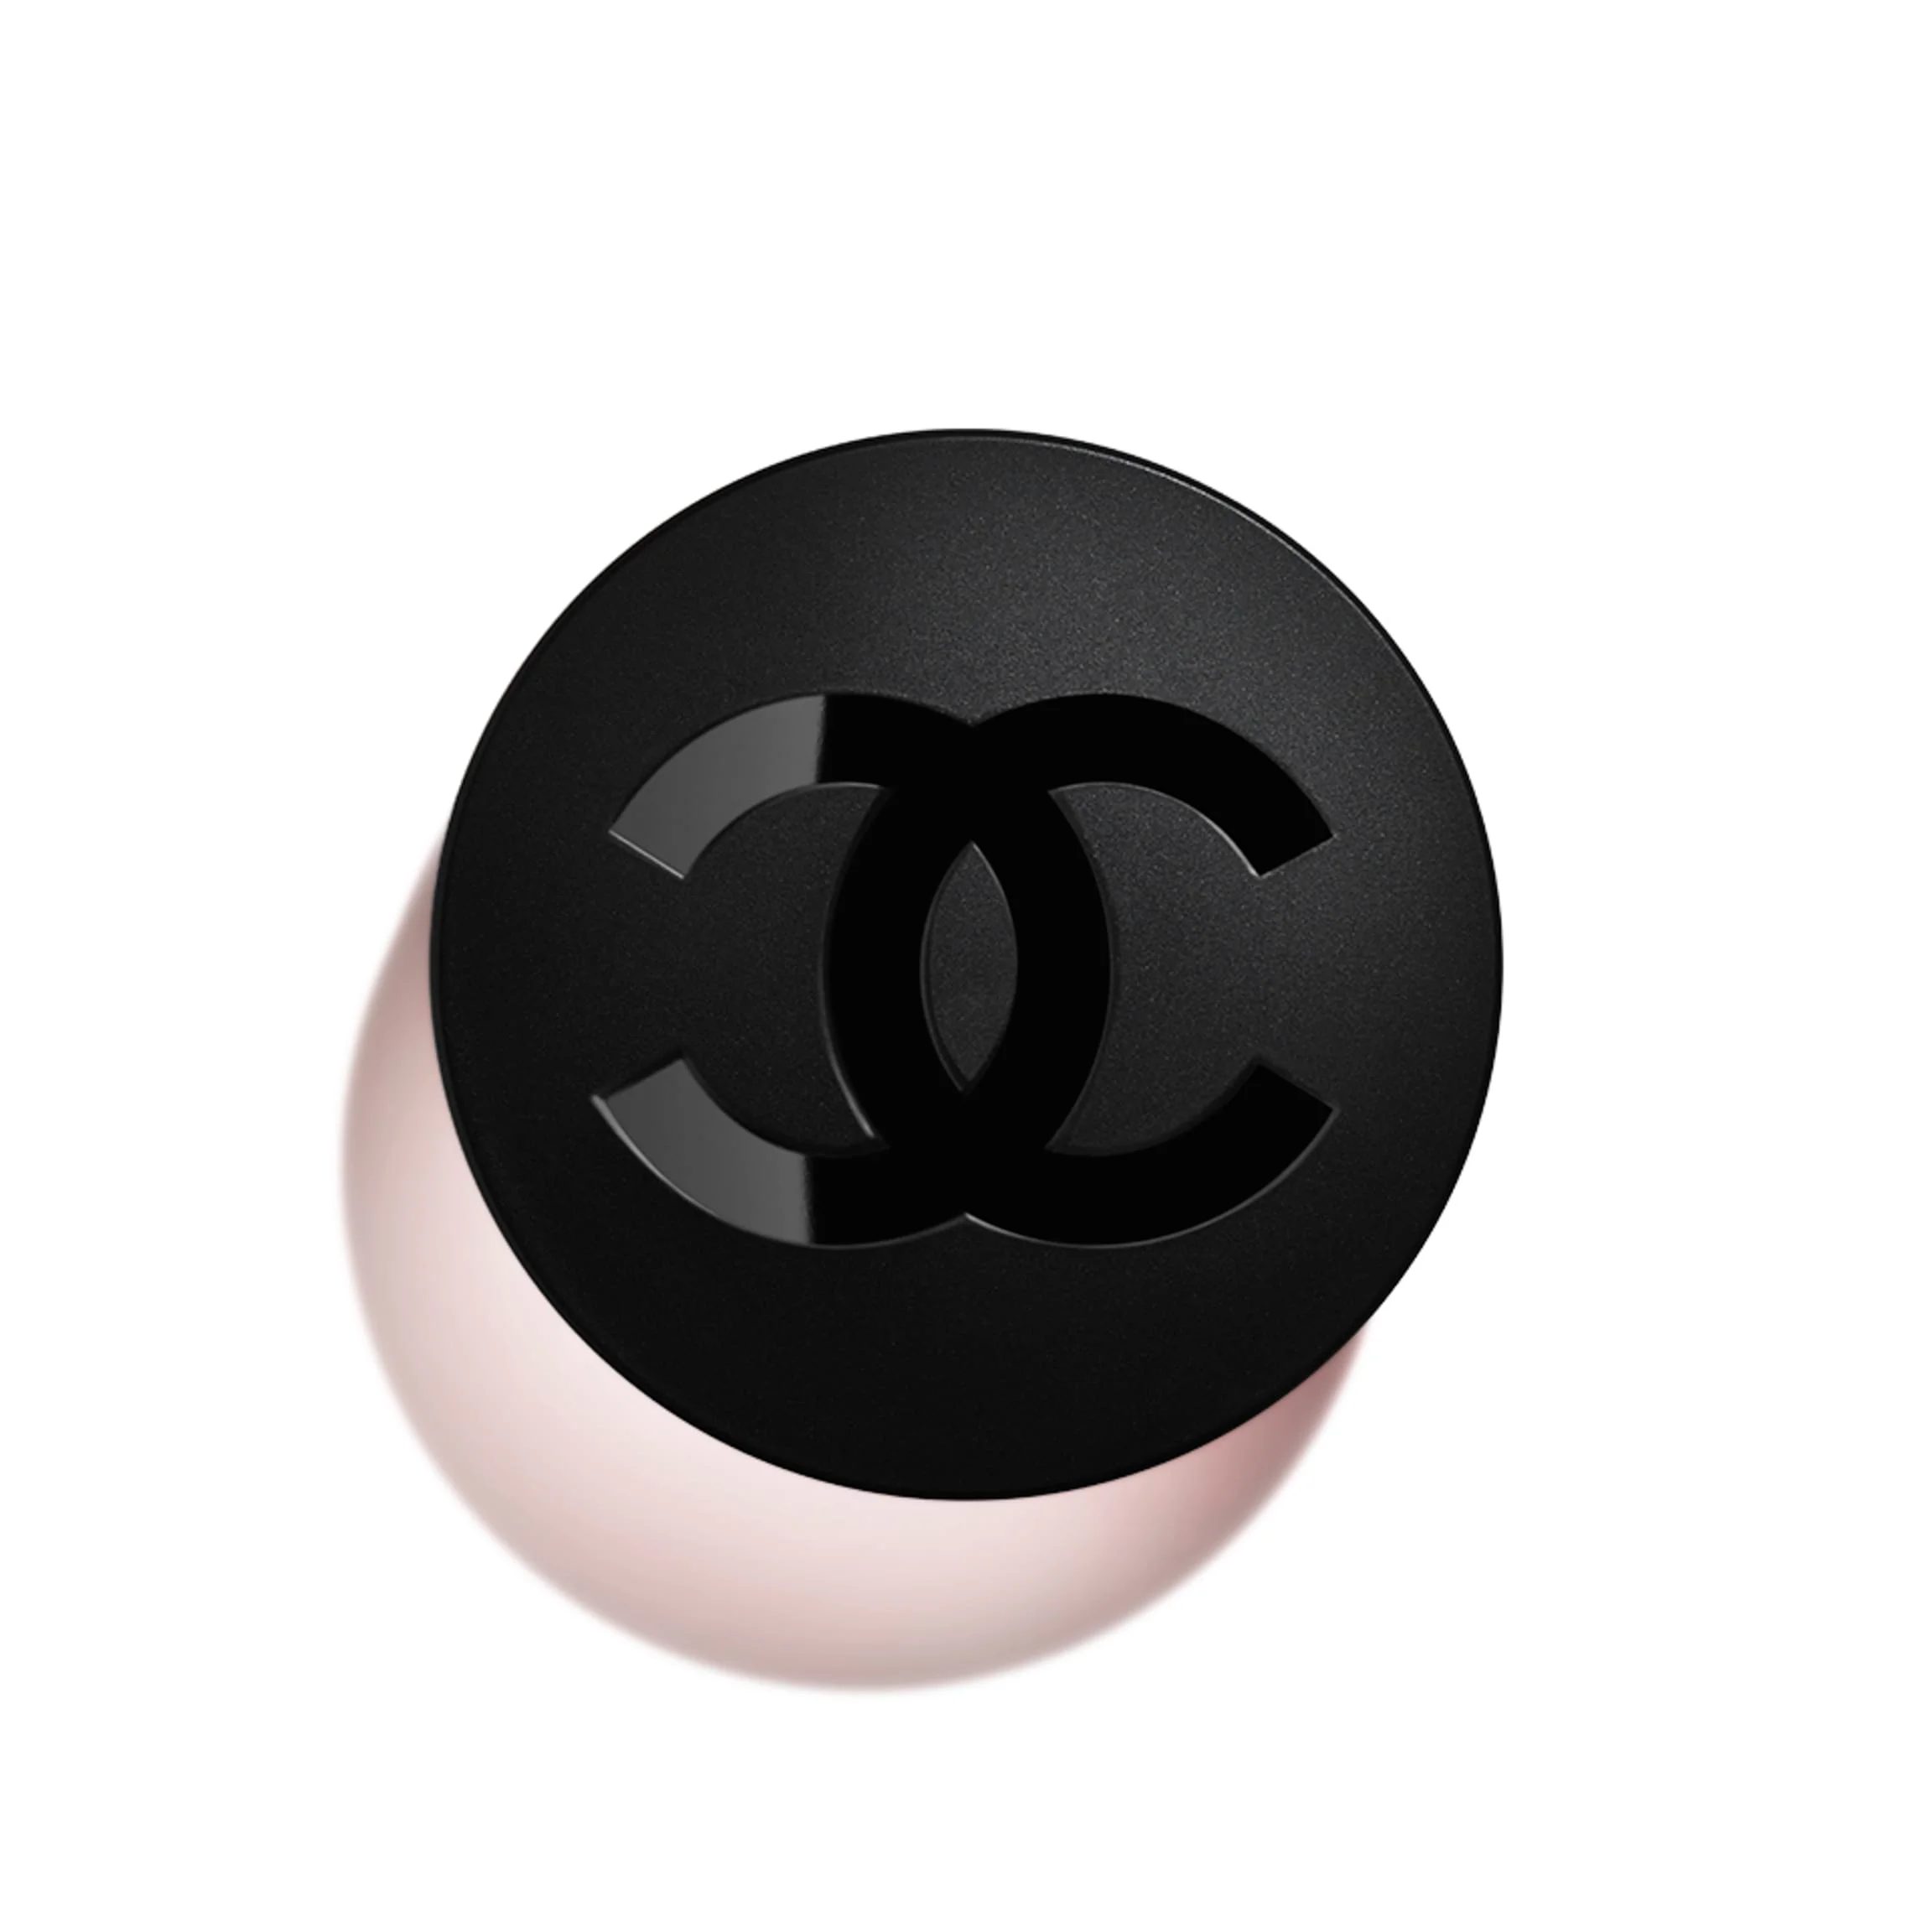 Chanel Vital Beige (3) No. 1 de Chanel Lip & Cheek Balm Review & Swatches